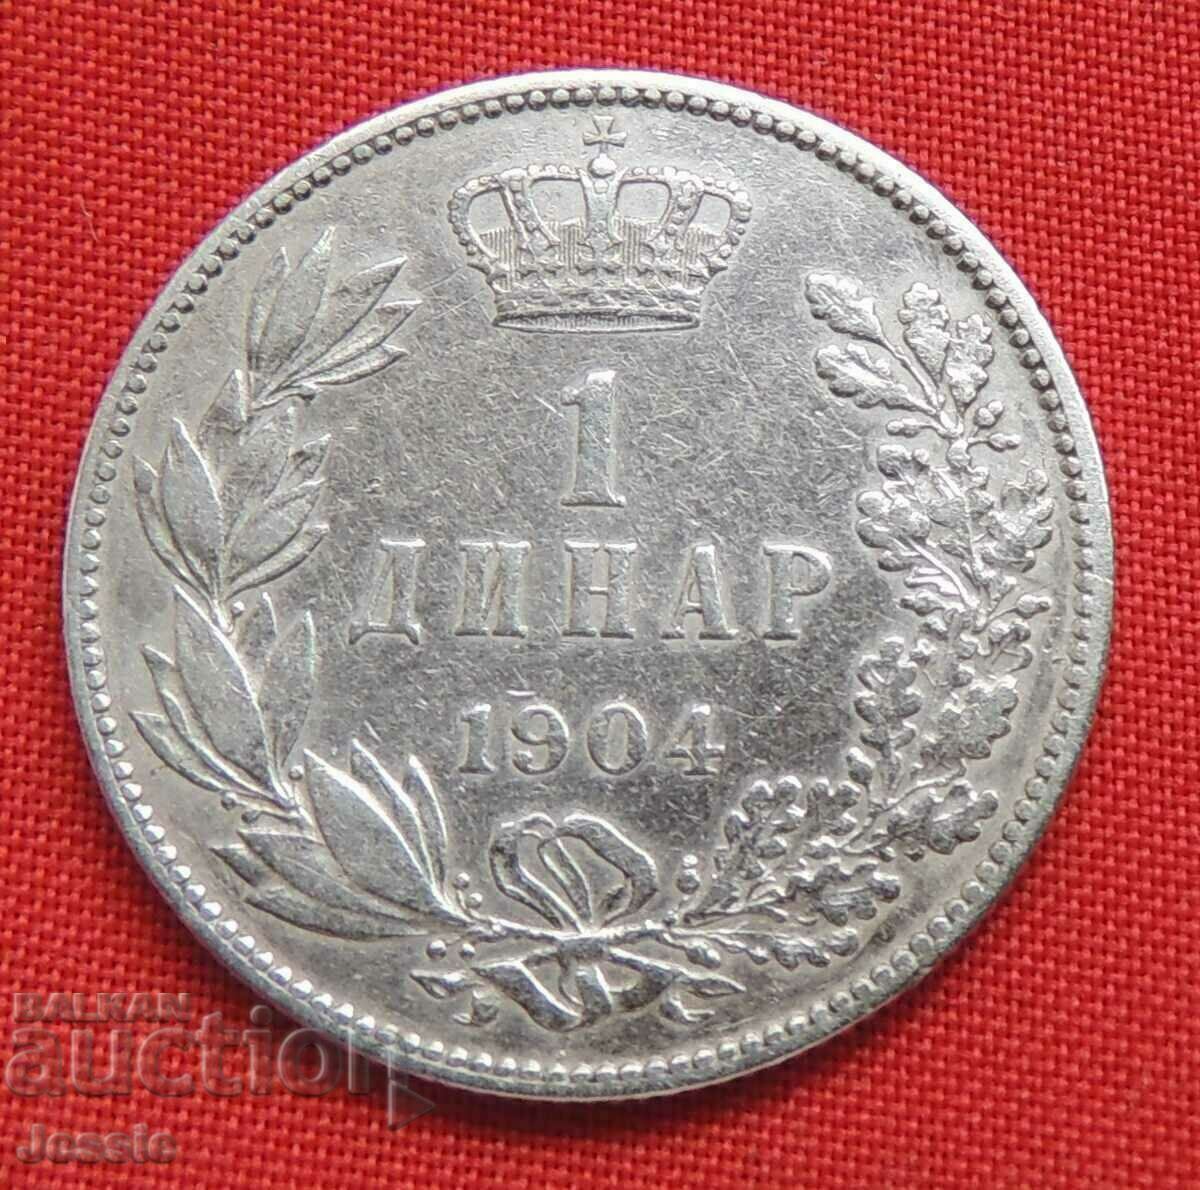 1 dinar 1904 #2 year - Serbia